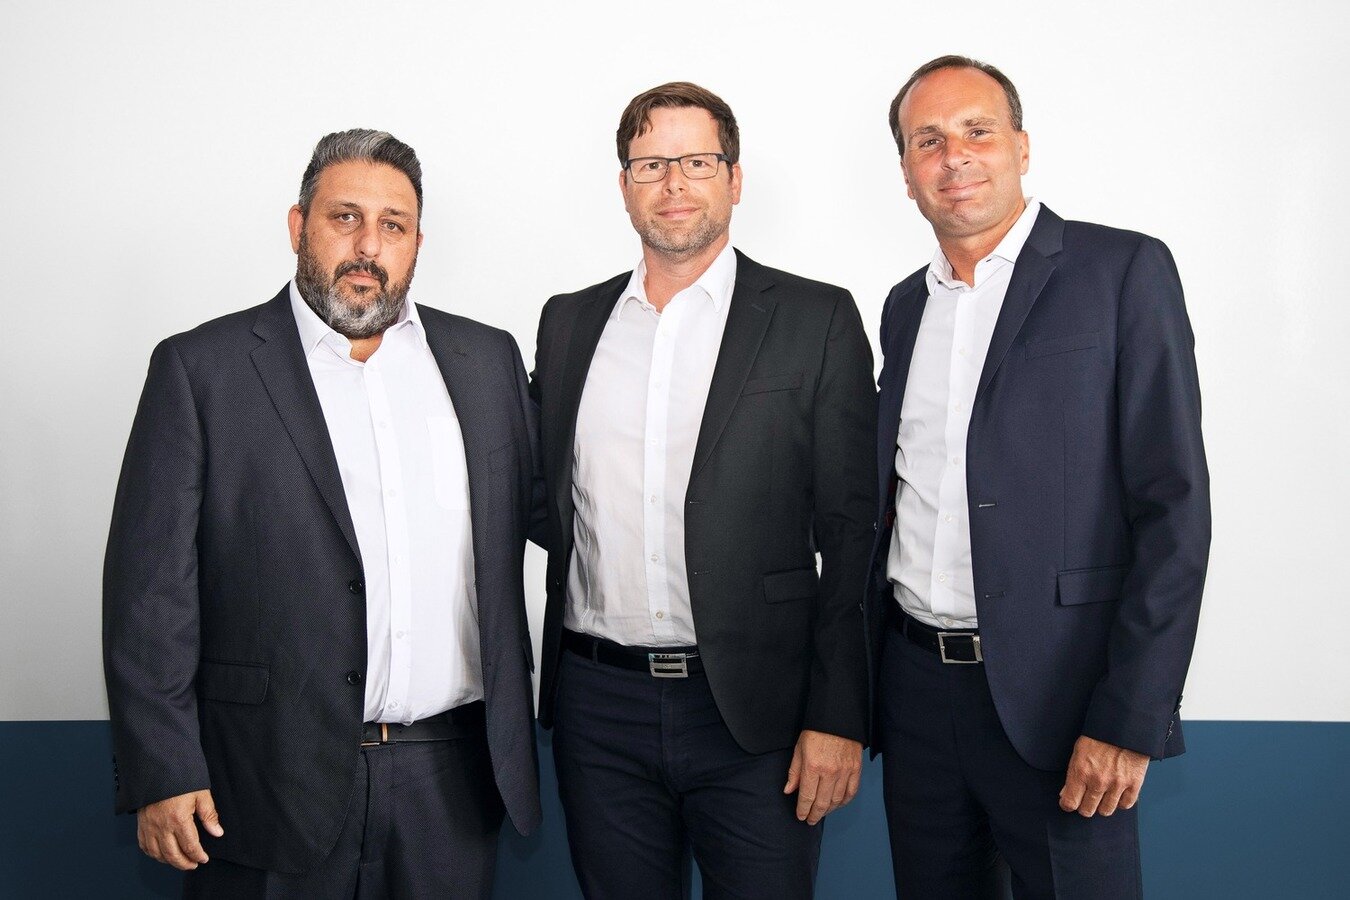 Team photo with representatives of Code Blue Ltd. and Dussmann Group 